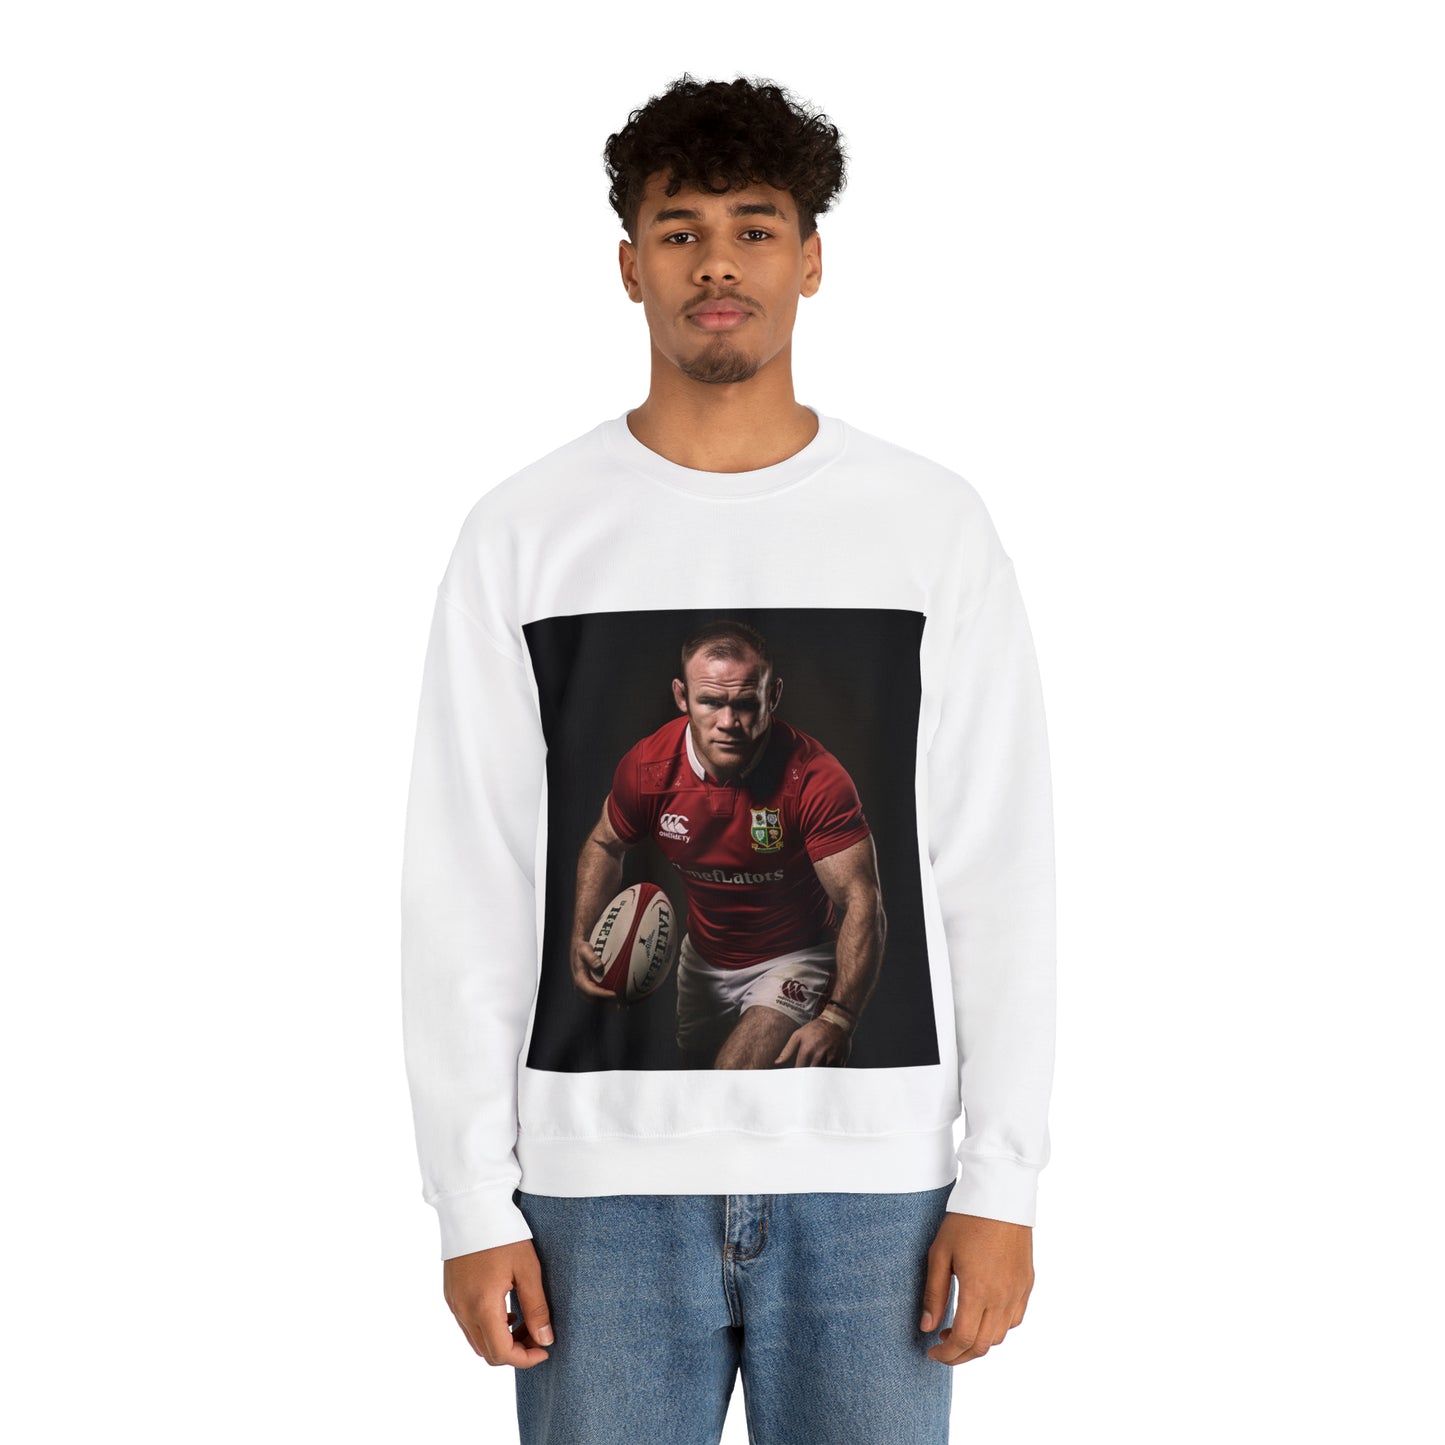 Ready Rooney - light sweatshirts